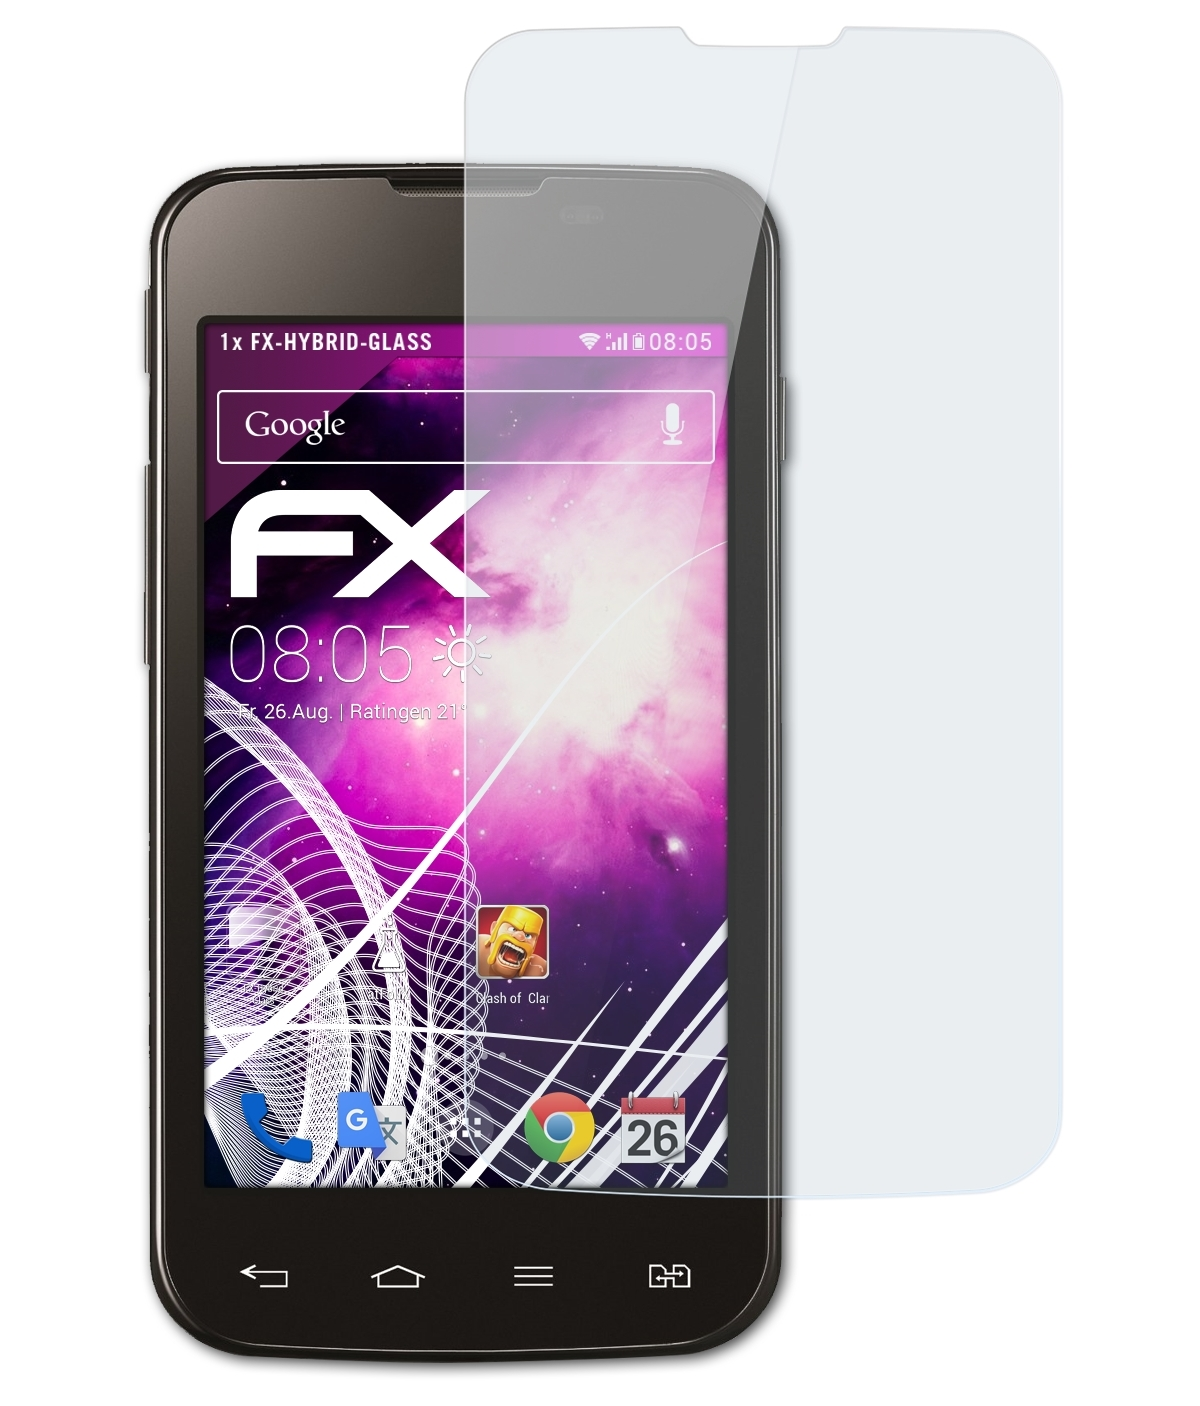 ATFOLIX FX-Hybrid-Glass Schutzglas(für LG Optimus L5 II Dual (E455))